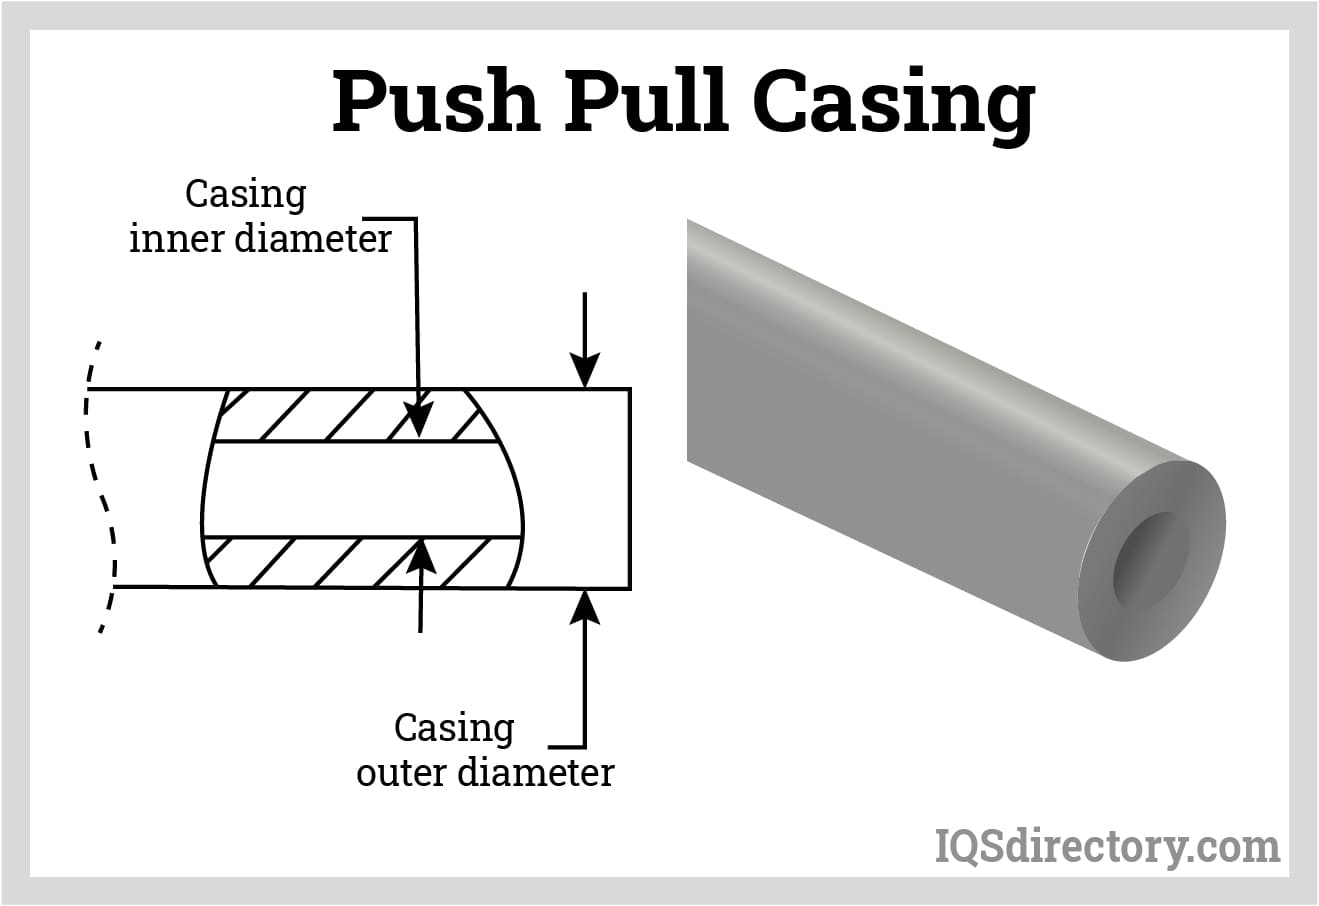 Push Pull Casing